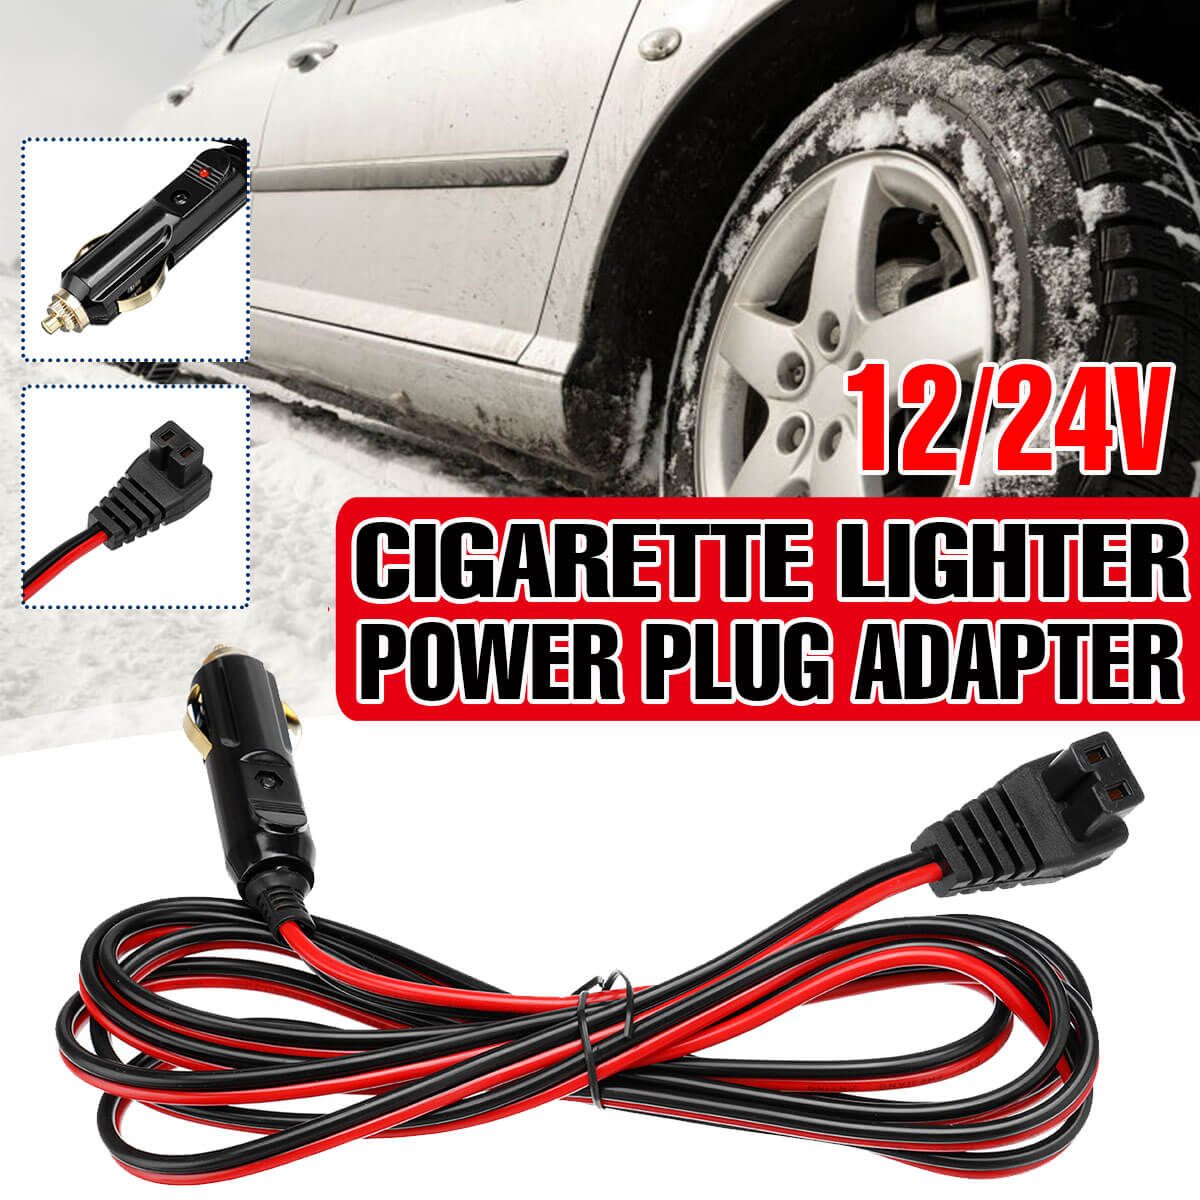 A72 Cigarette Lighter Power Plug Adapter 12/24V